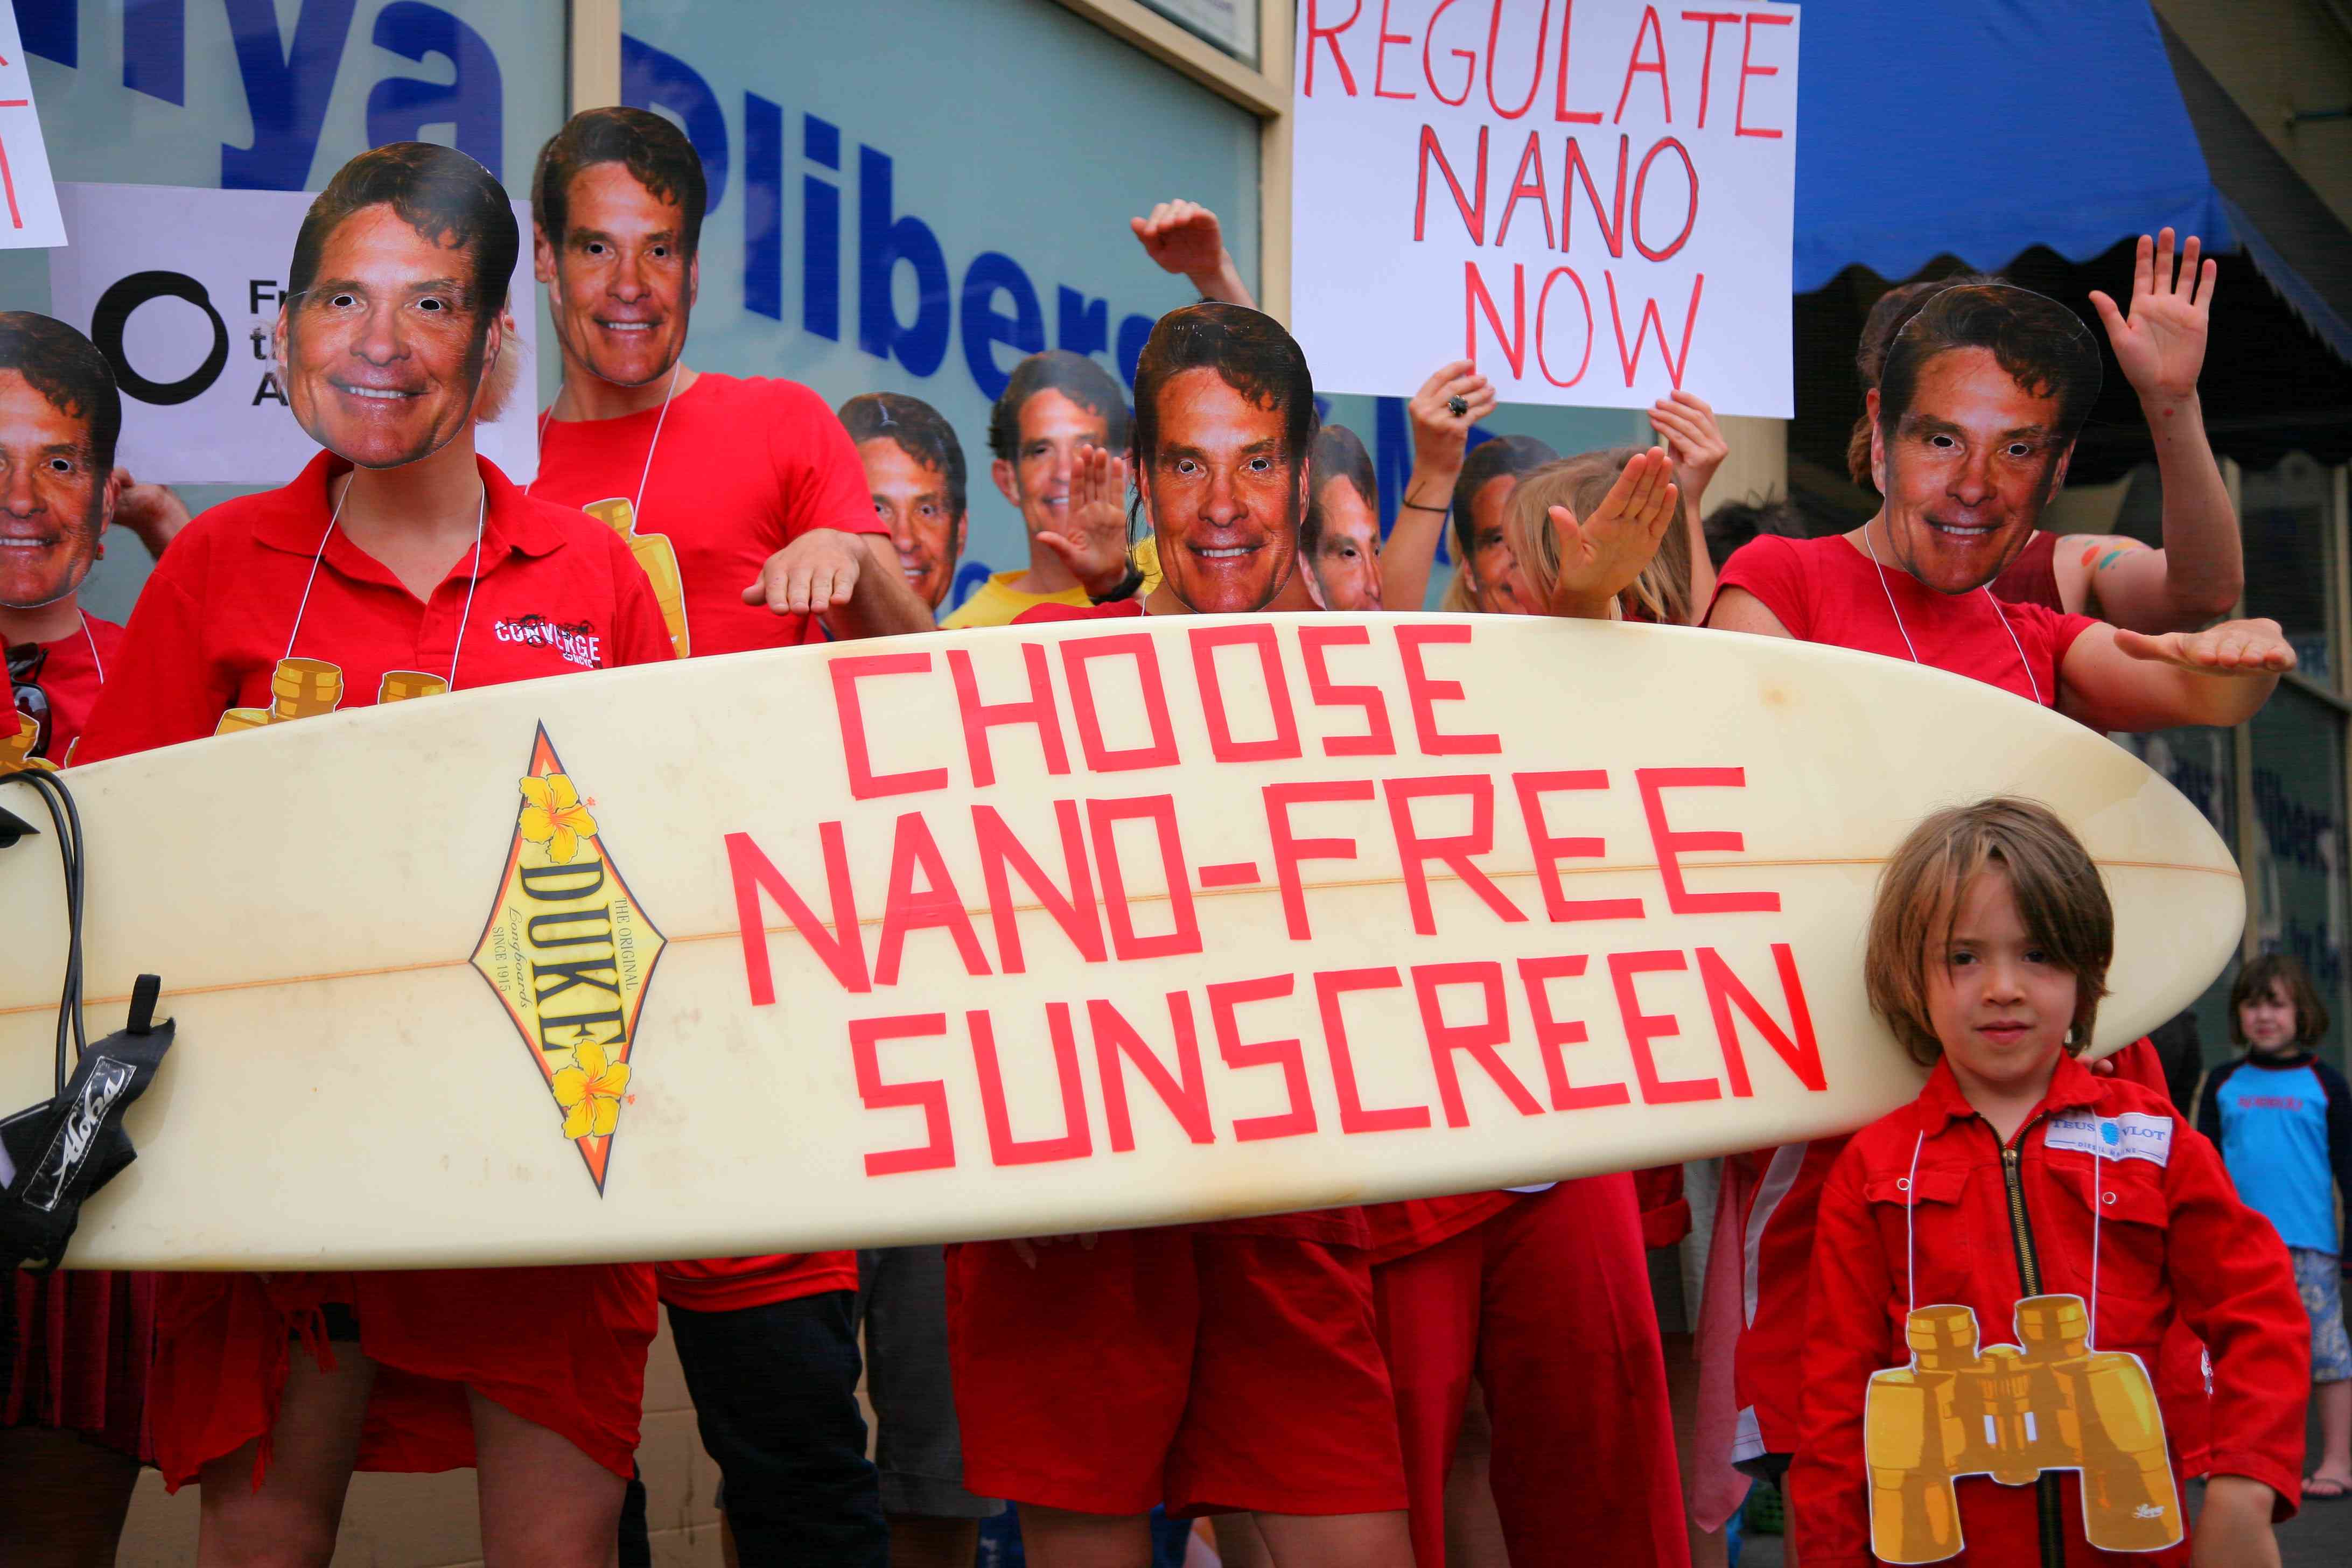 Hasselhoffs to Health Minister: Please regulate nano-sunscreens